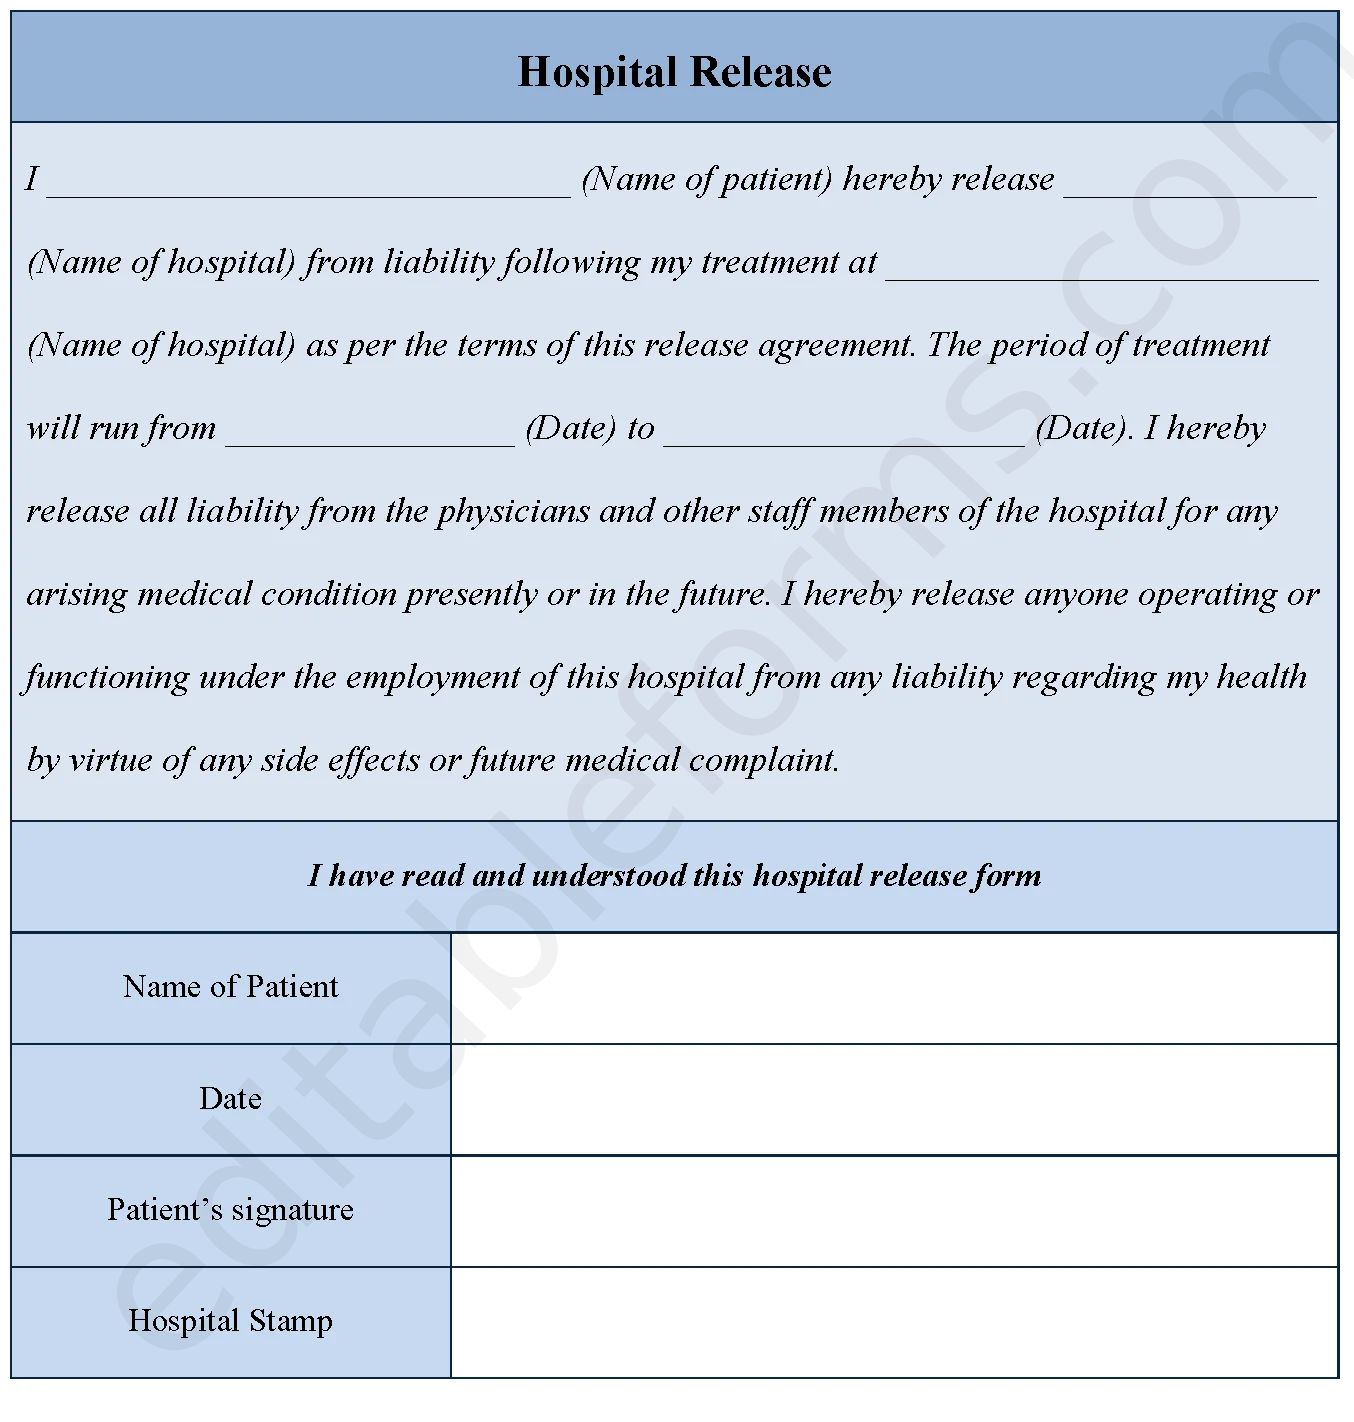 Hospital Release Fillable PDF template